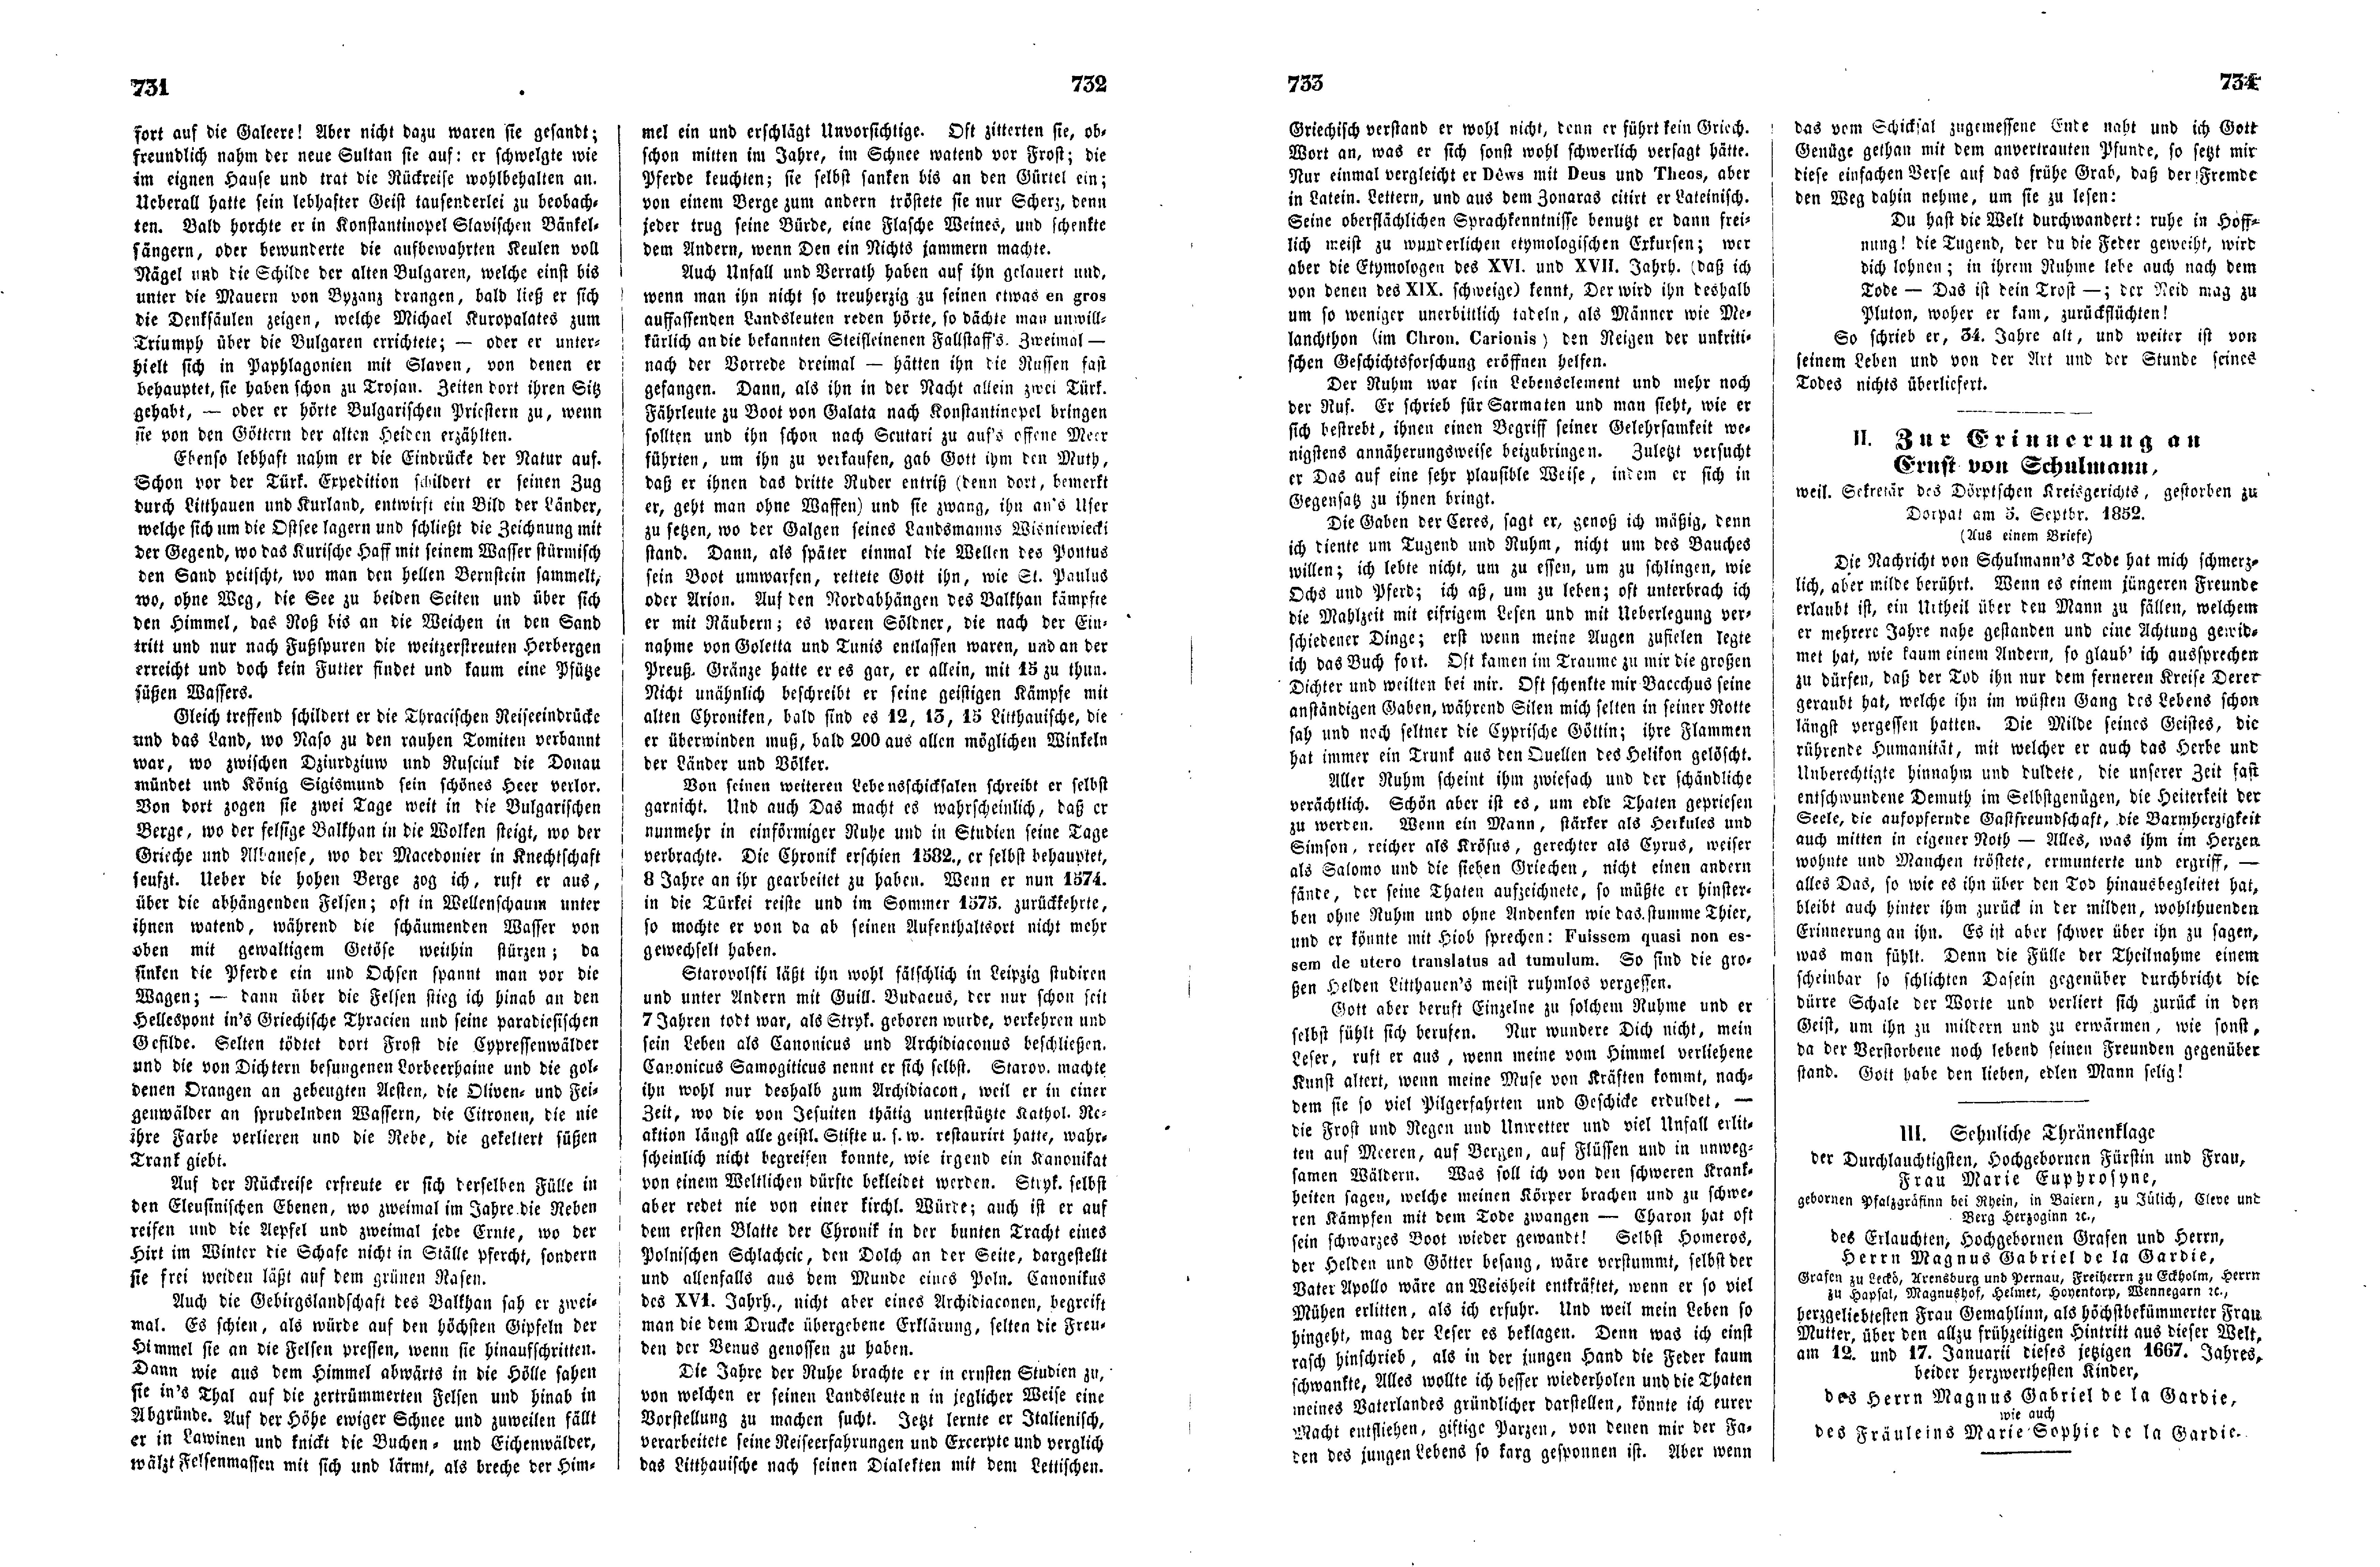 Das Inland [17] (1852) | 188. (731-734) Main body of text